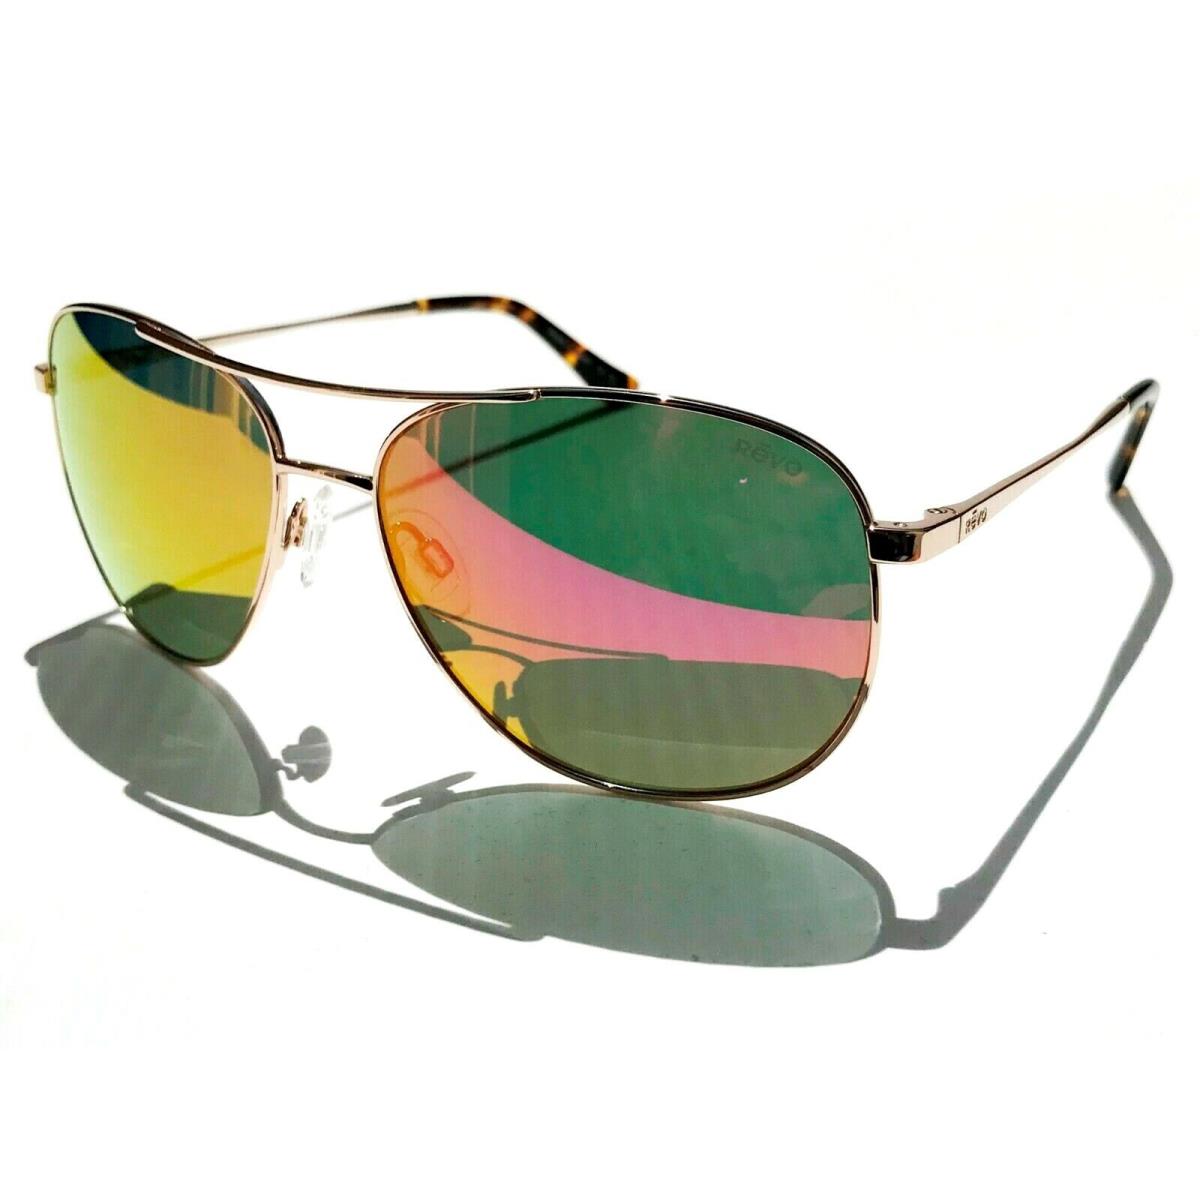 Revo sunglasses Maxie - Gold Frame, Red Lens